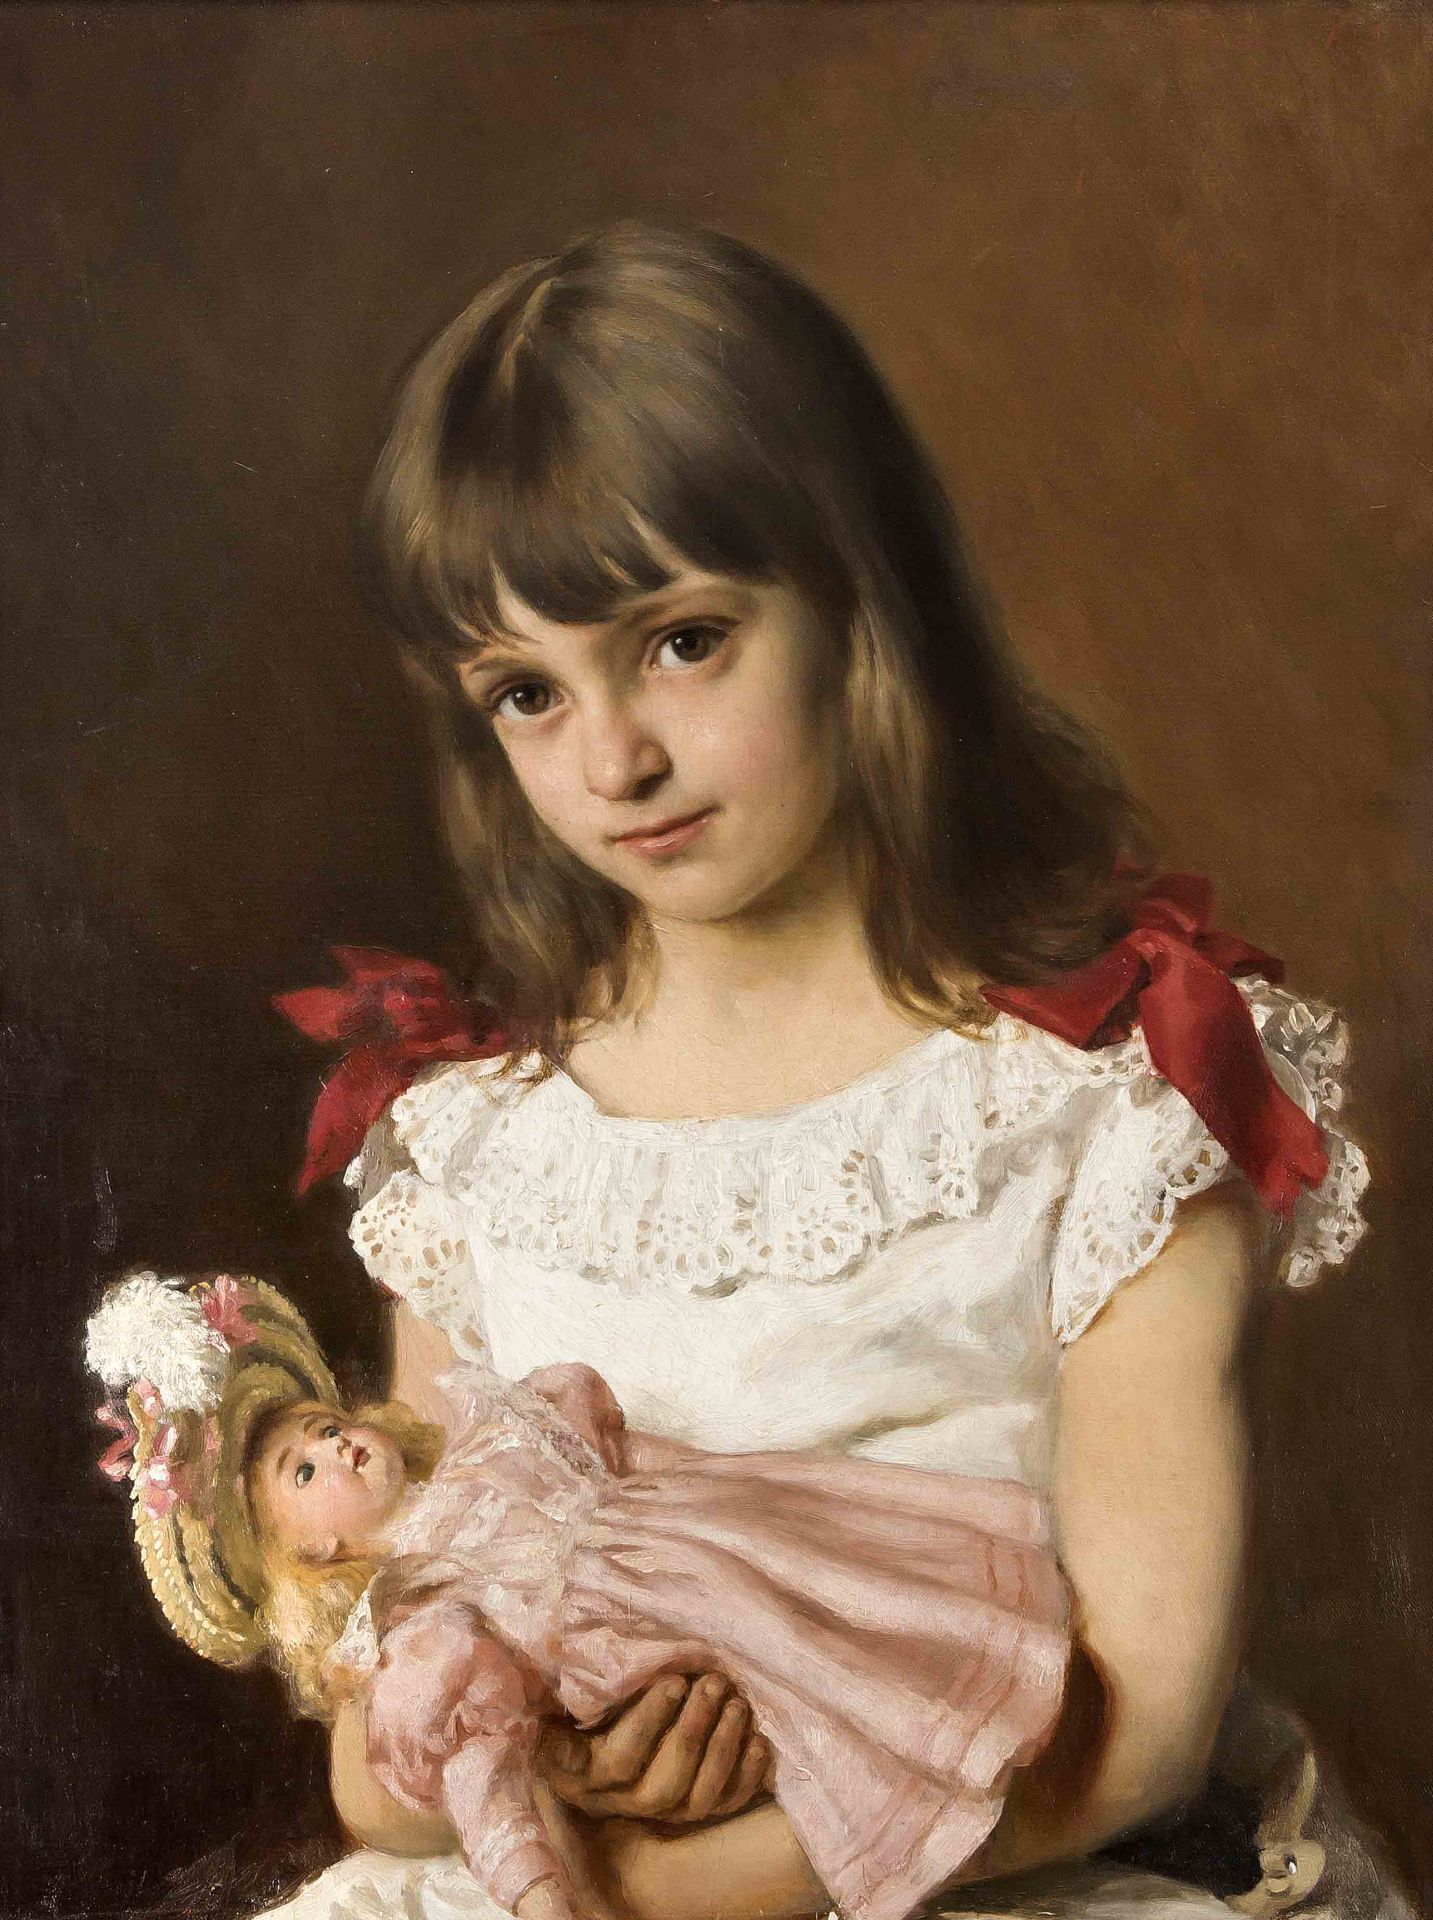 Tschautsch, Albert. 1843 Seelow - 1922 Berlin. Porträt eines Mädchens mit Puppe. Öl/Lw.1895.